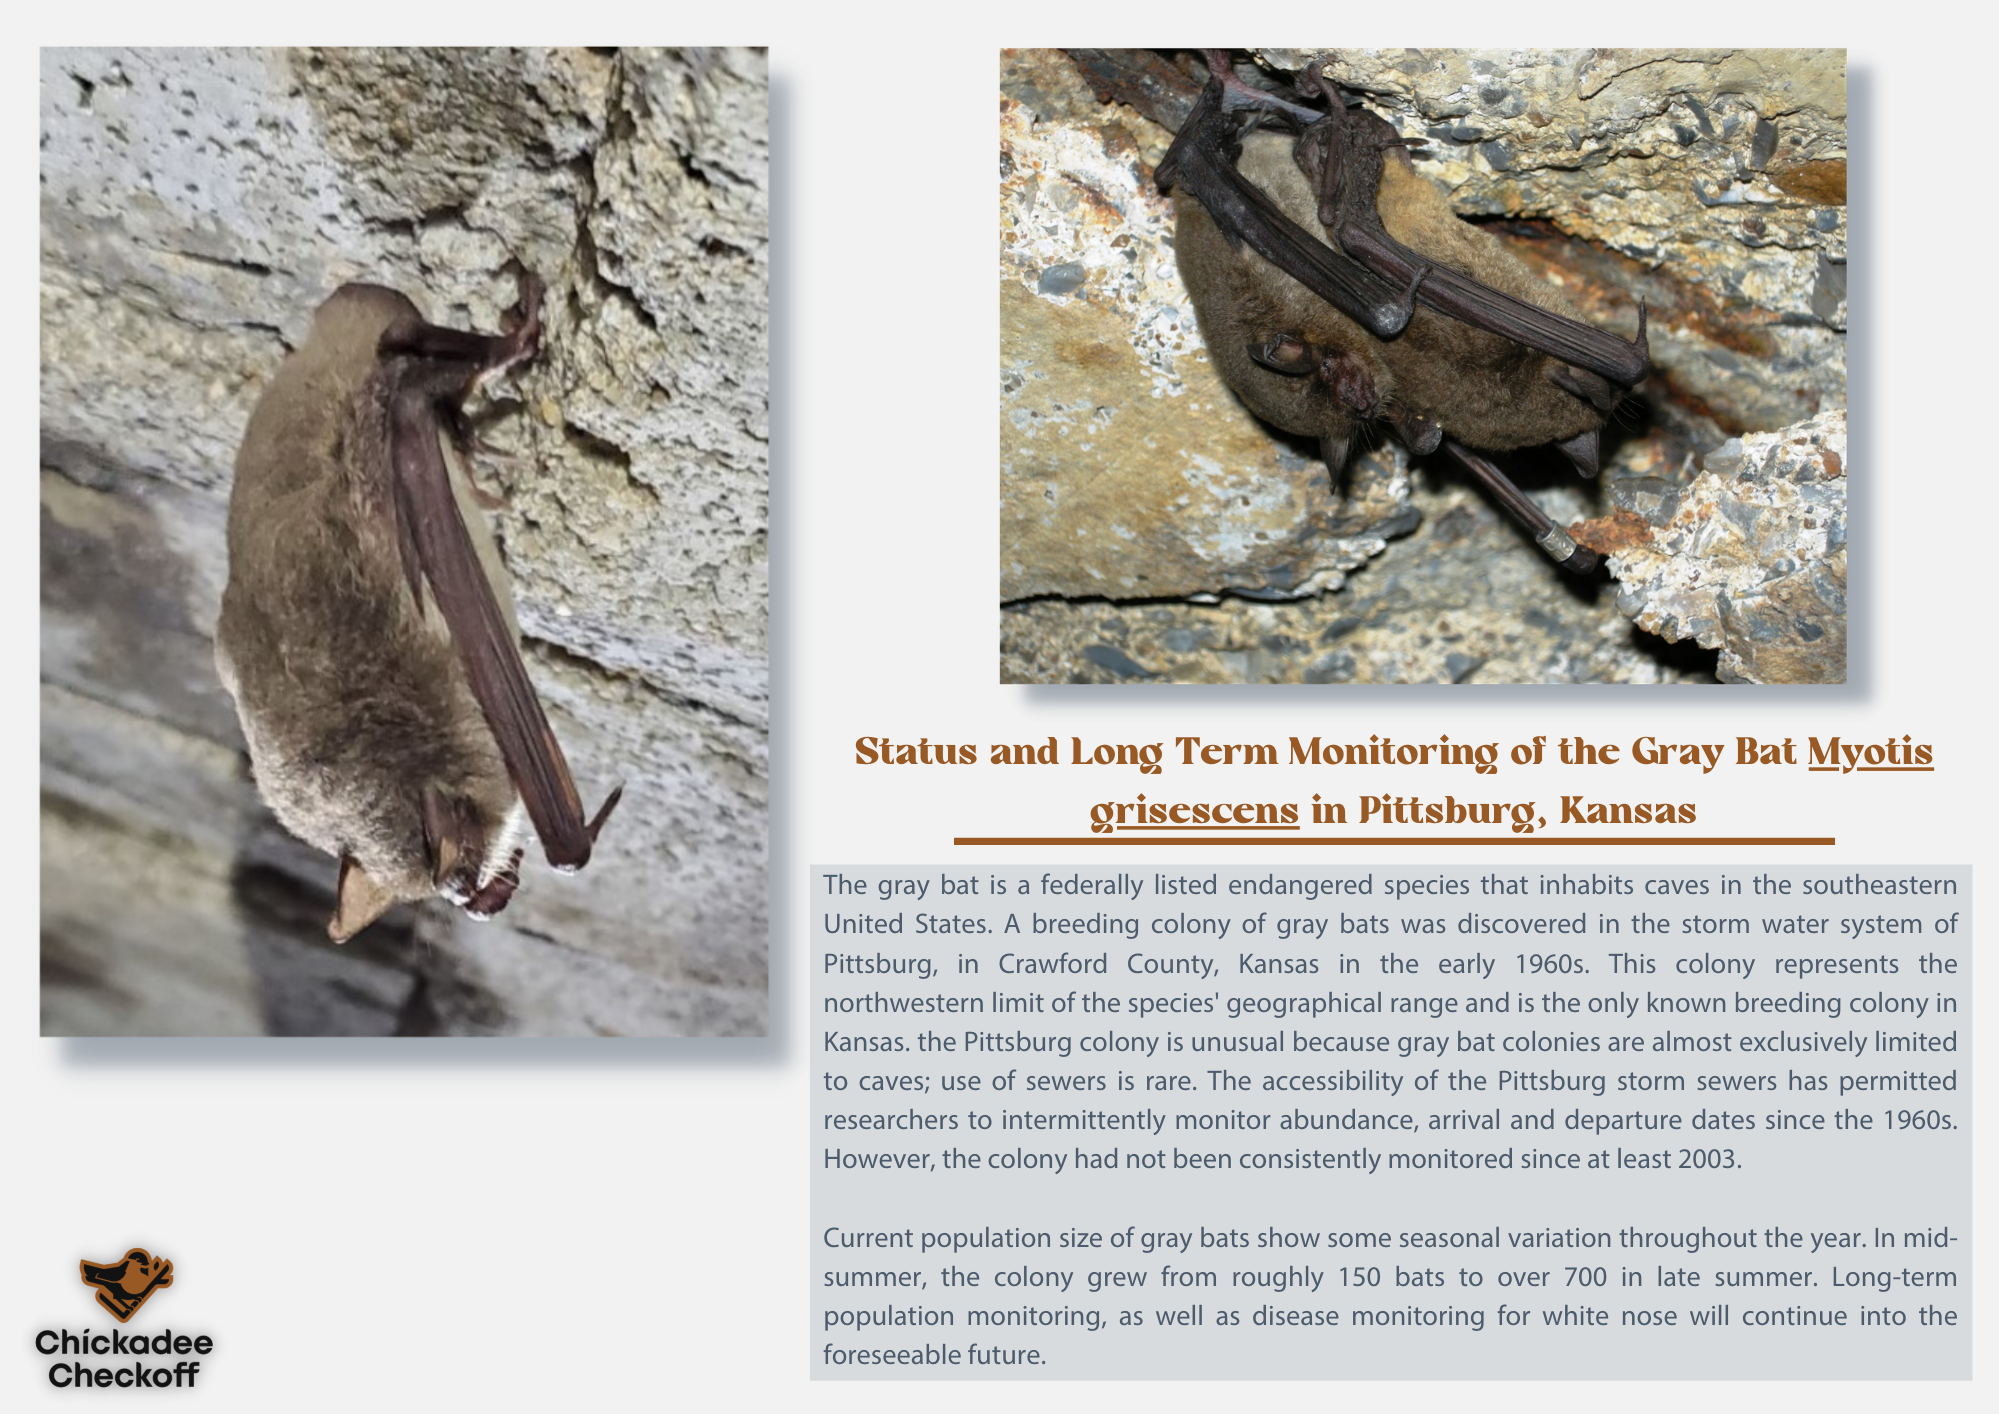 Status and long term monitoring of the gray bat Myotis grisescens in Pittsburg, Kansas